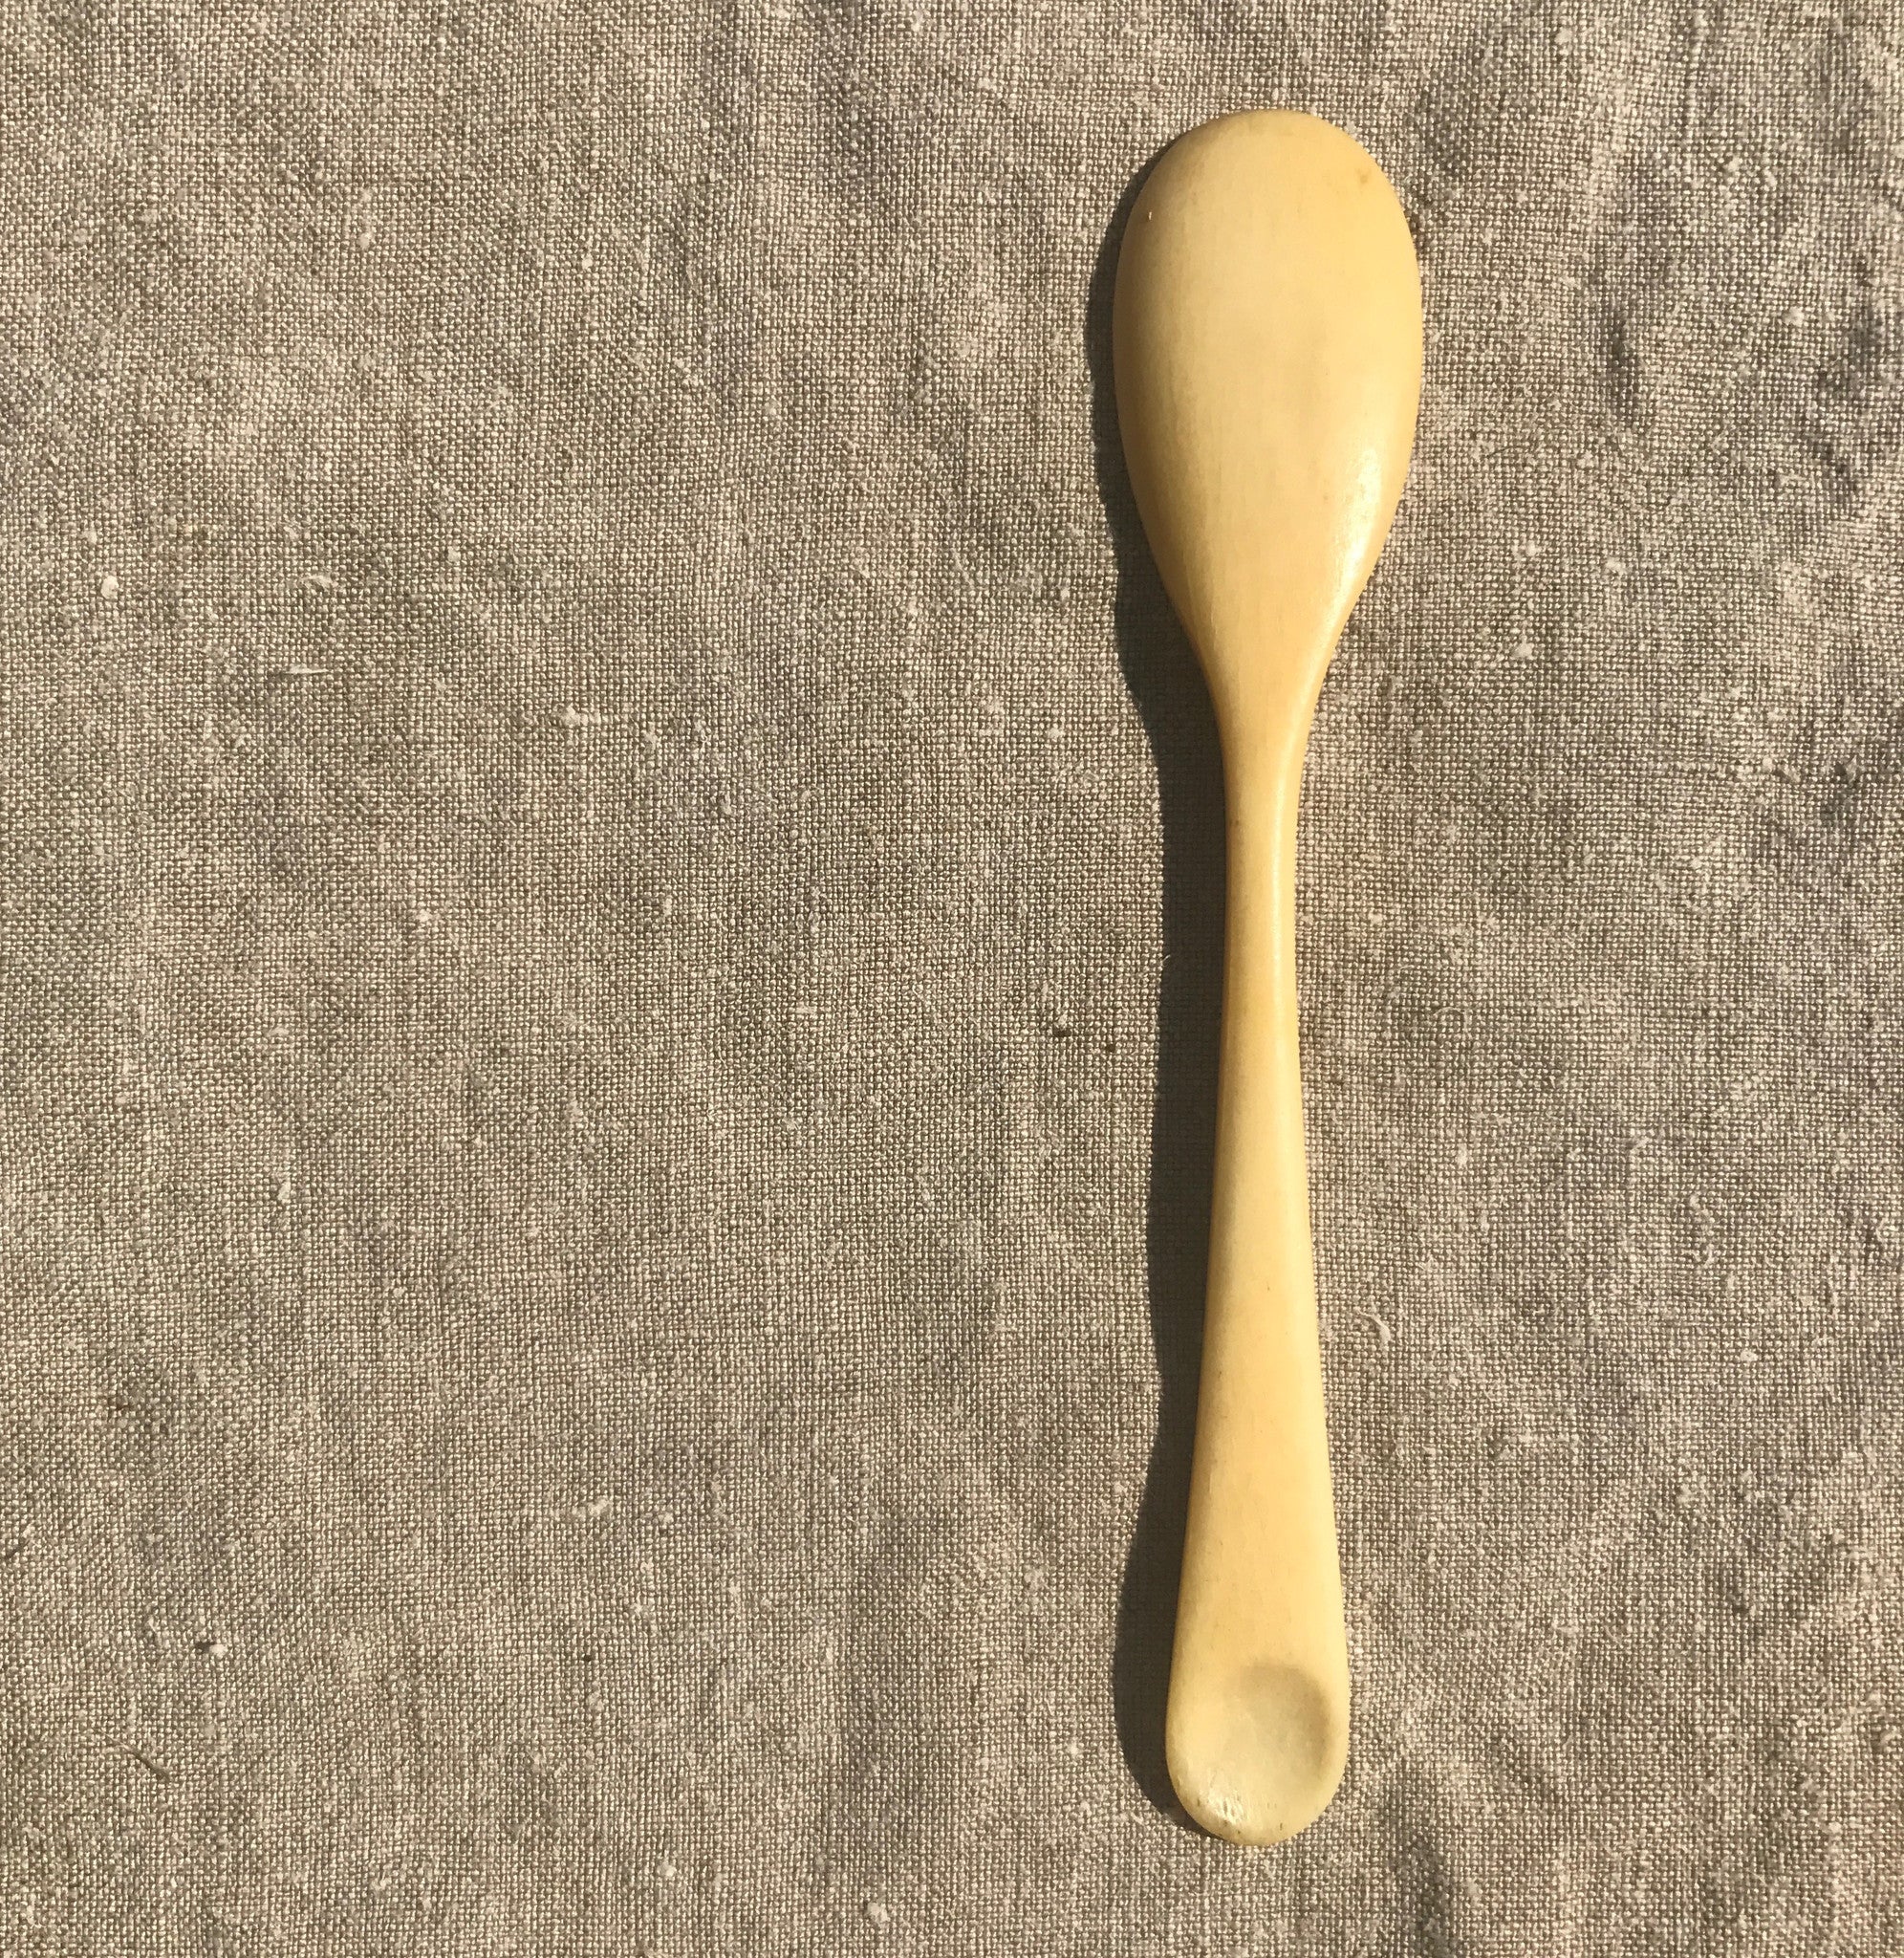 seaman's caviar spoon (7 of 7)